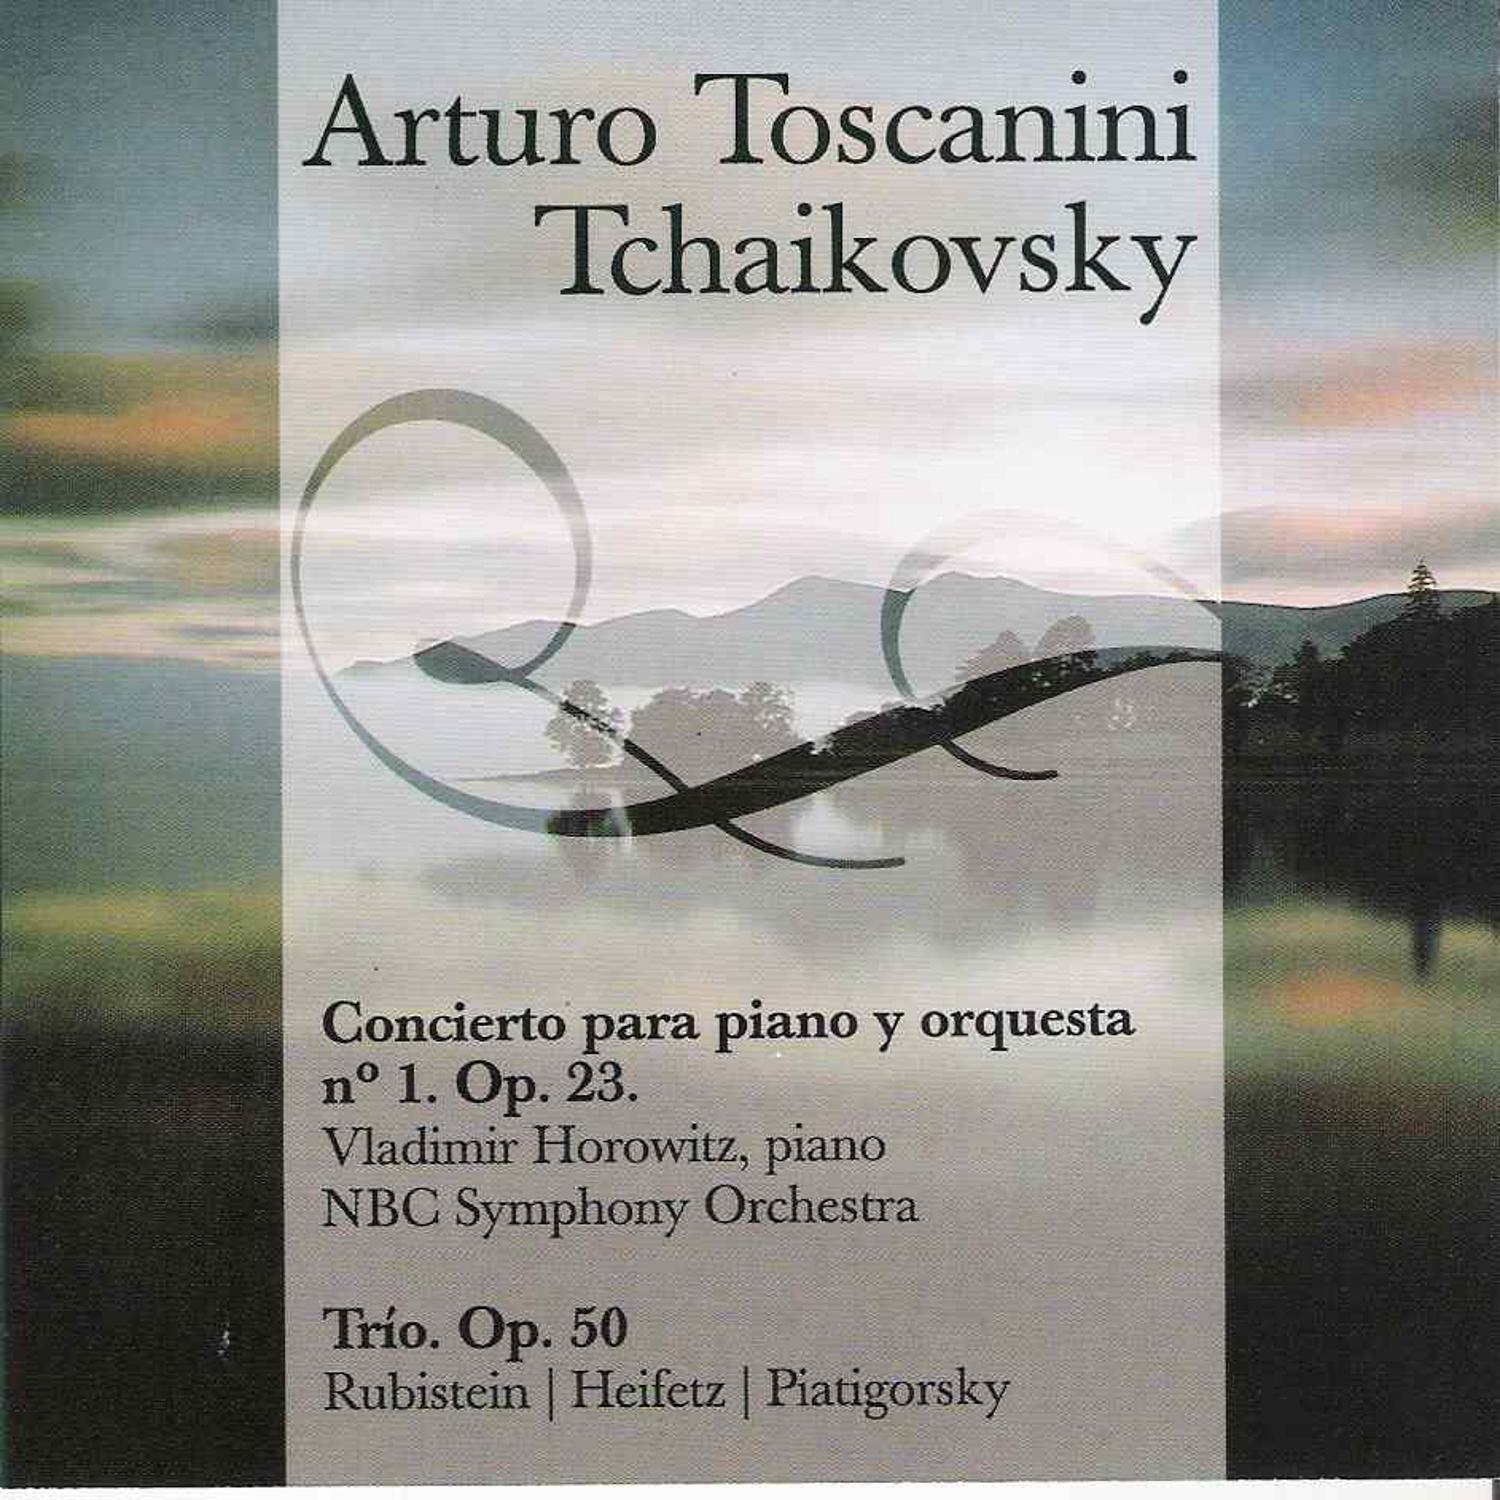 Arturo Toscanini - Tchaicovsky